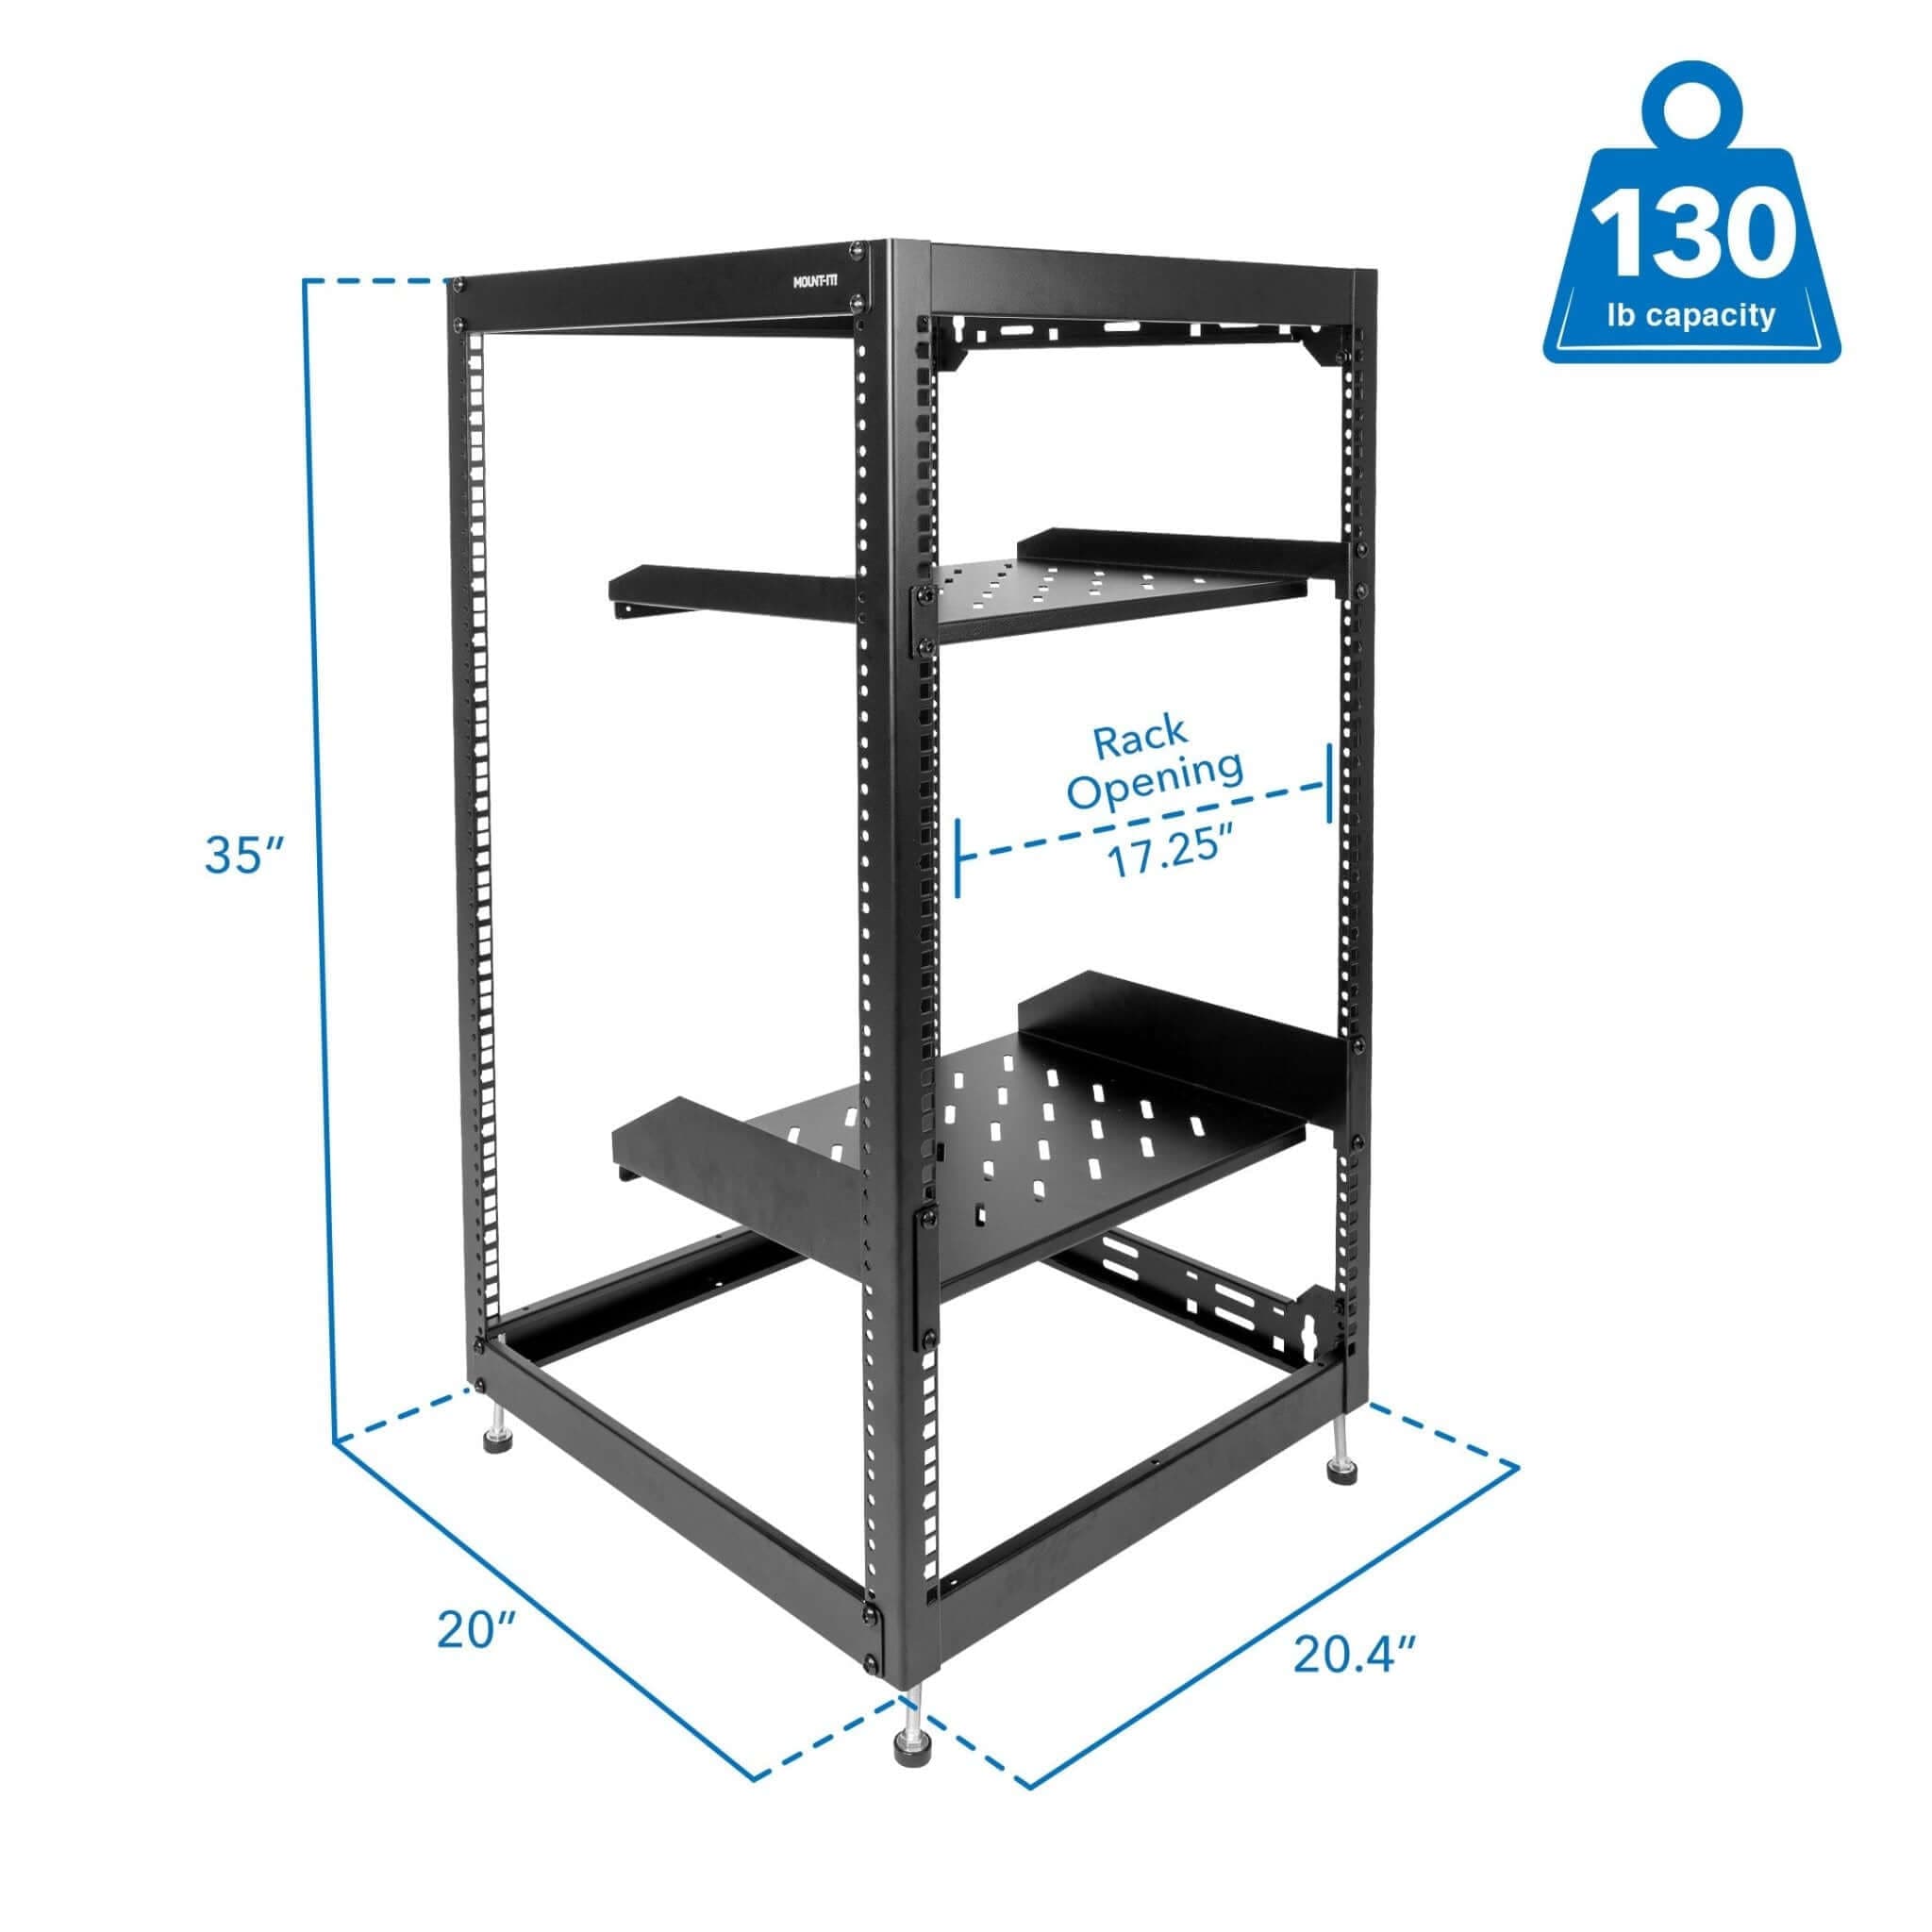 20U 17" Black Steel Open Frame Server Rack with Adjustable Feet and Two Shelves - Mount-It!